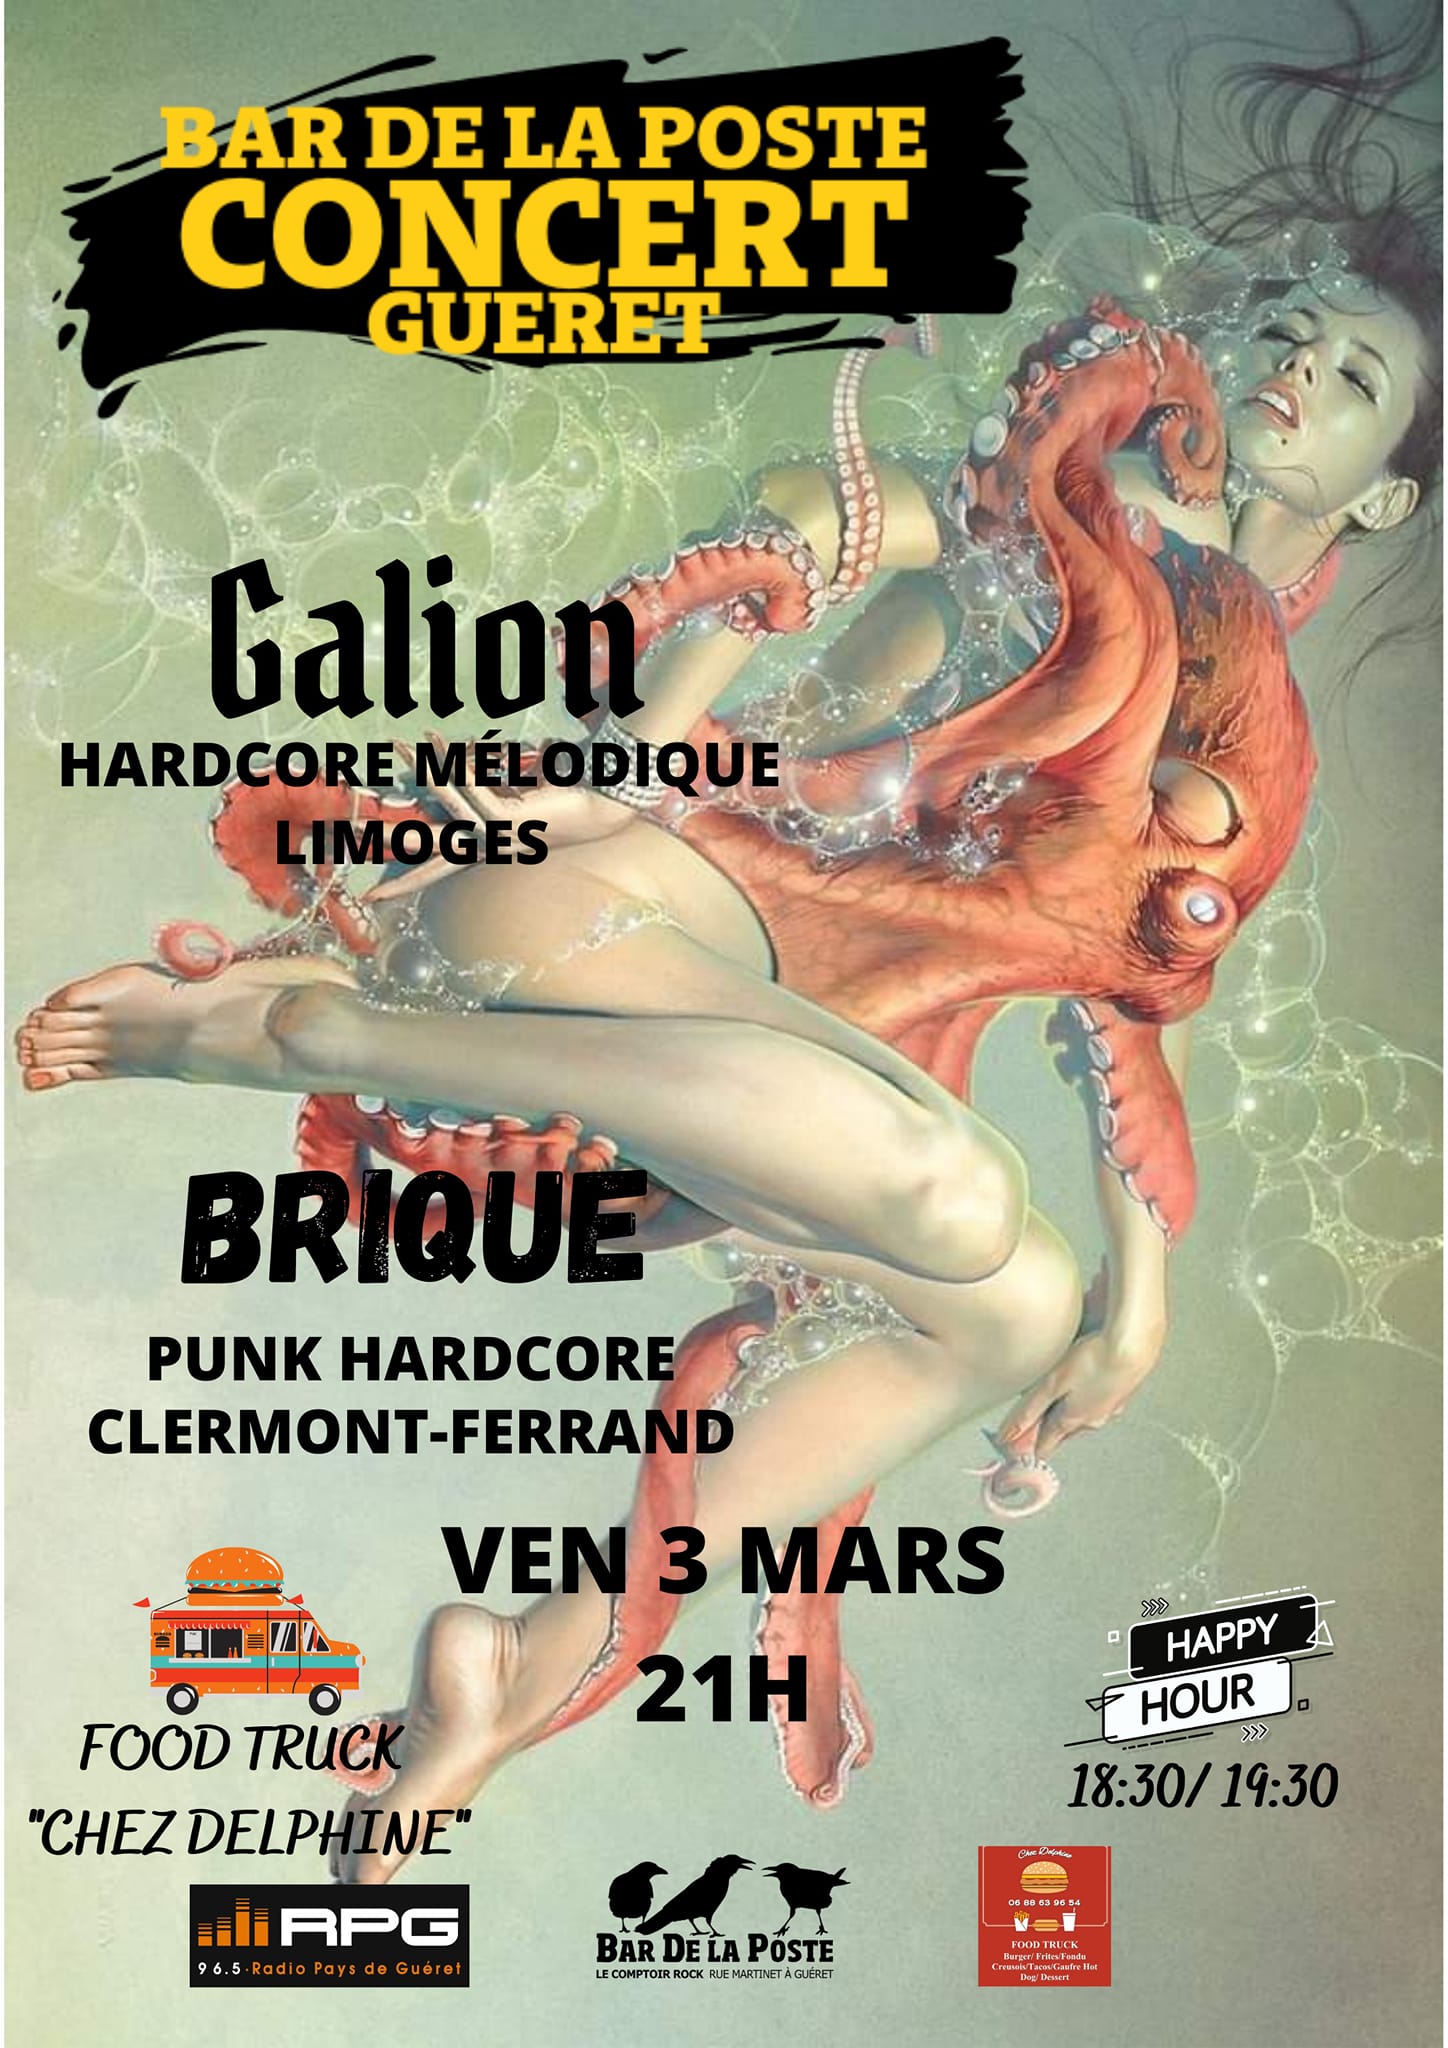 Galion + Brique